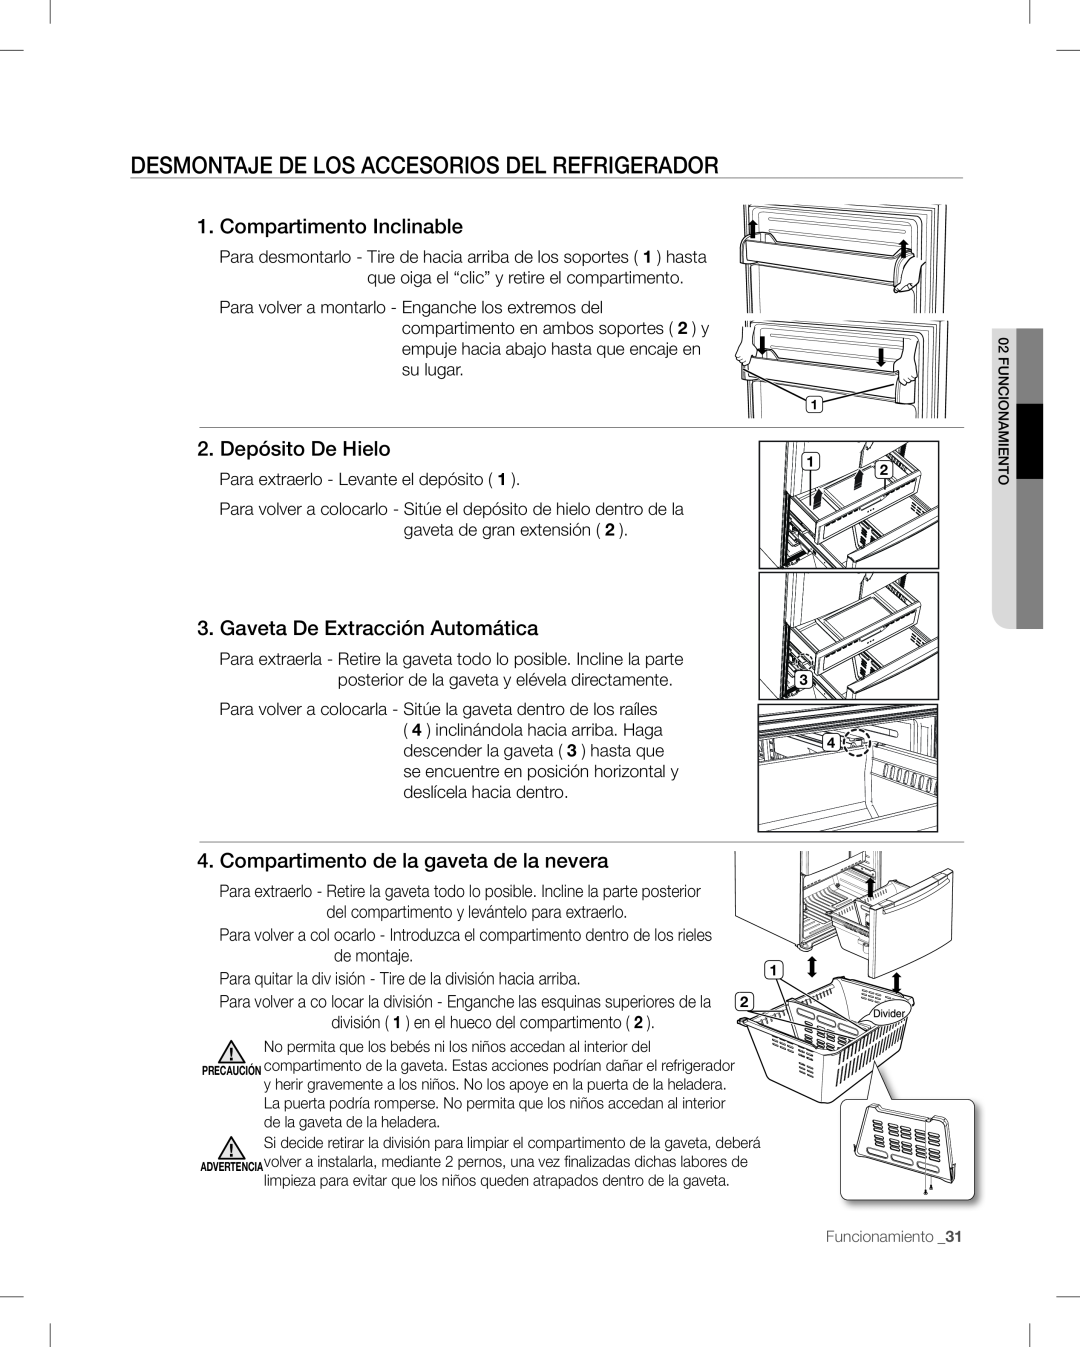 Samsung RF268AB user manual Compartimento Inclinable, Depósito De Hielo, Gaveta De Extracción Automática 